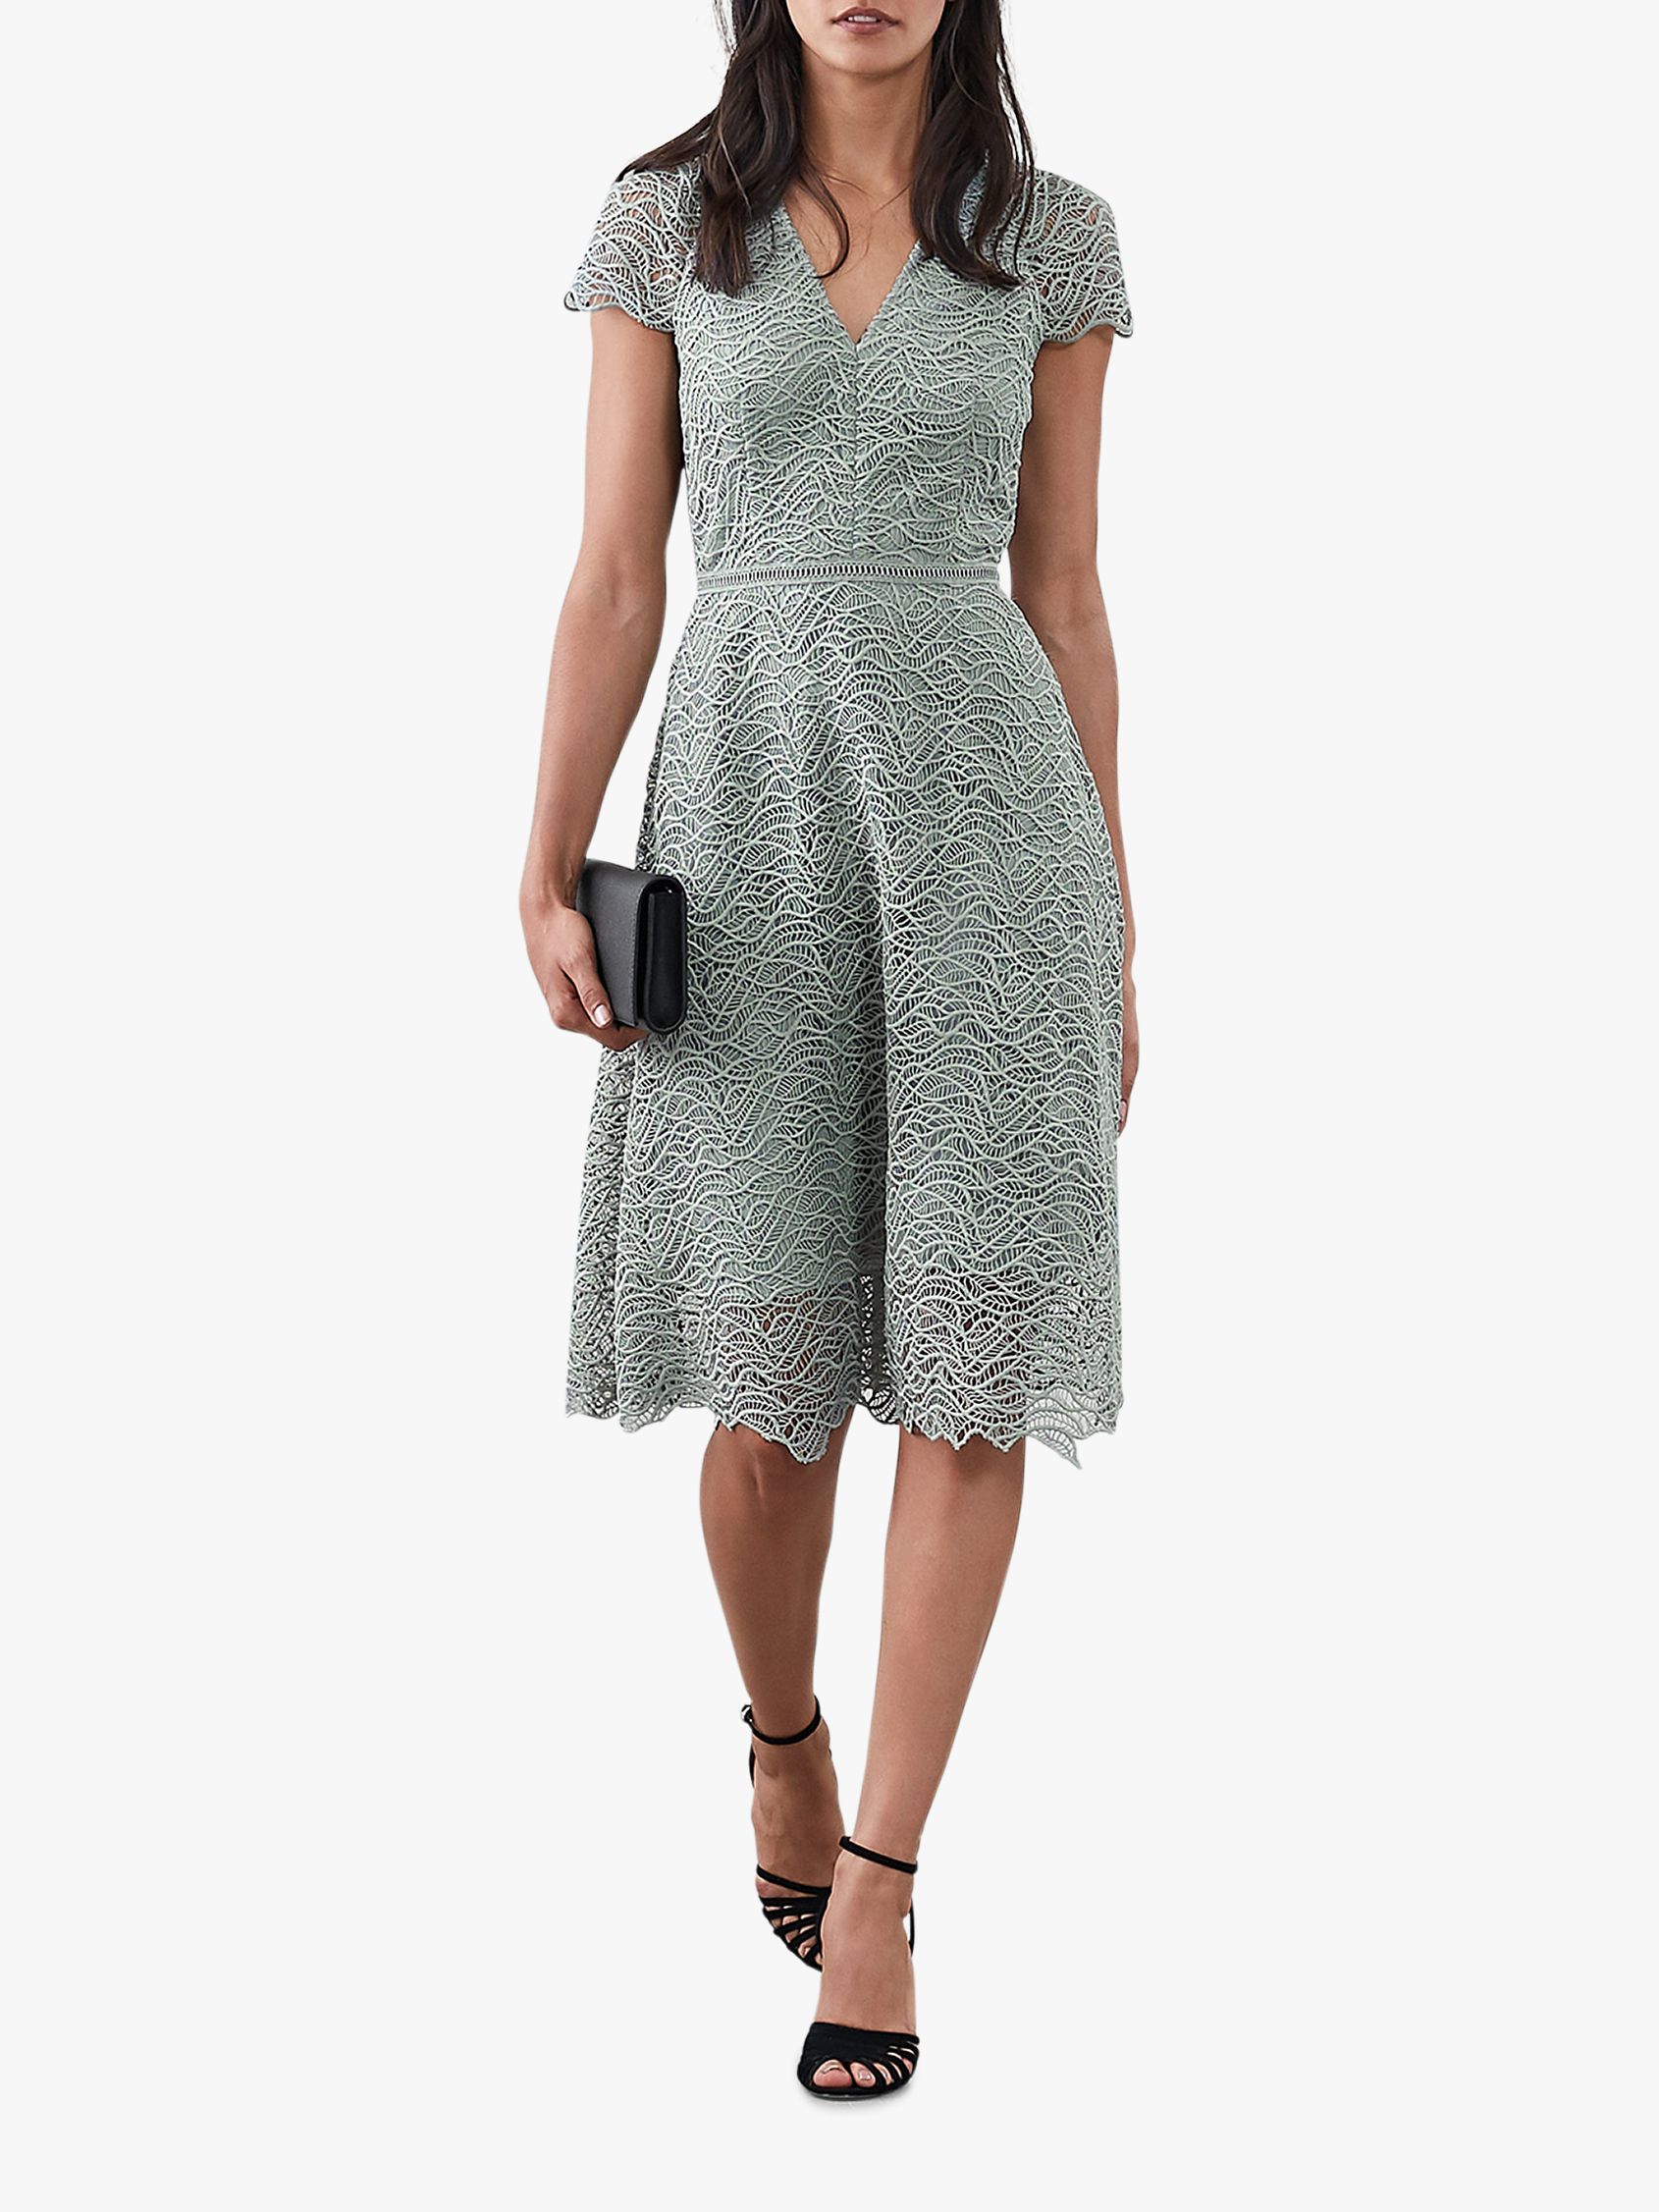 Reiss Arielle Leaf Lace Dress, Mid 